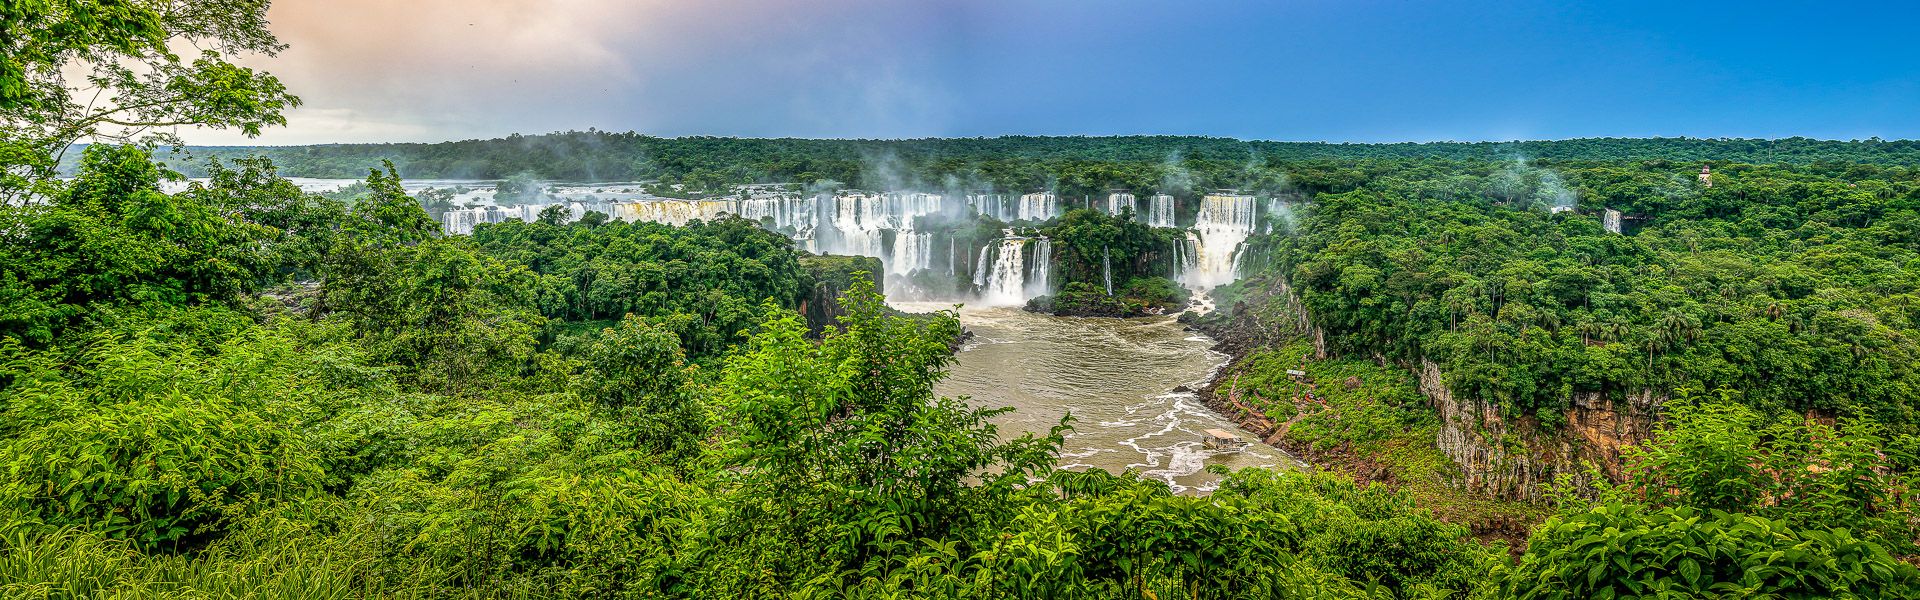 Iguaz-Wasserflle |  Heiko Behn, Pixabay / YOLO Reisen